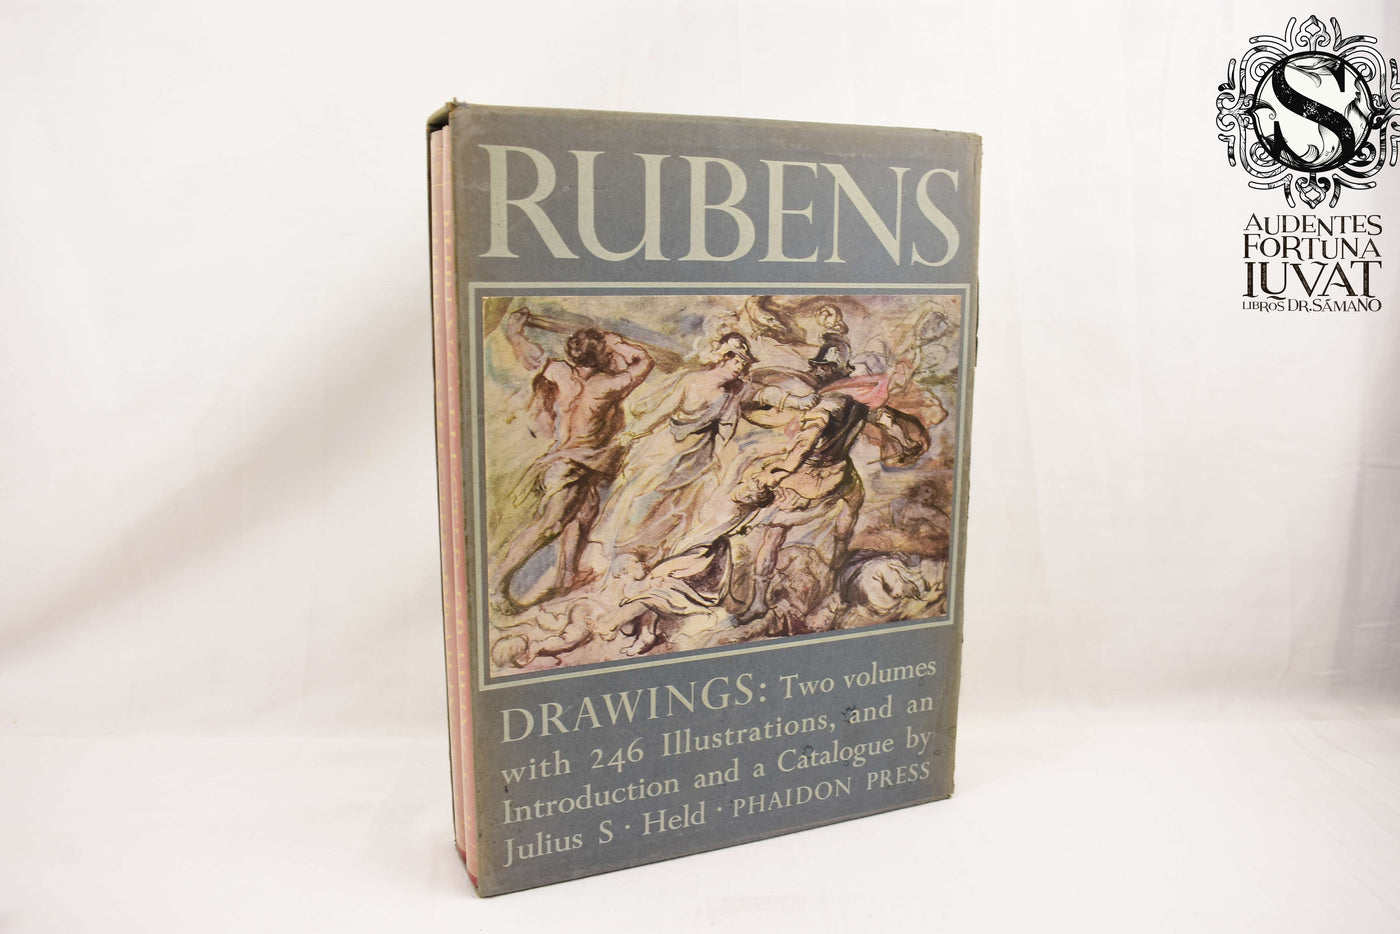 Rubens - JULIUSS. HELD (int.)